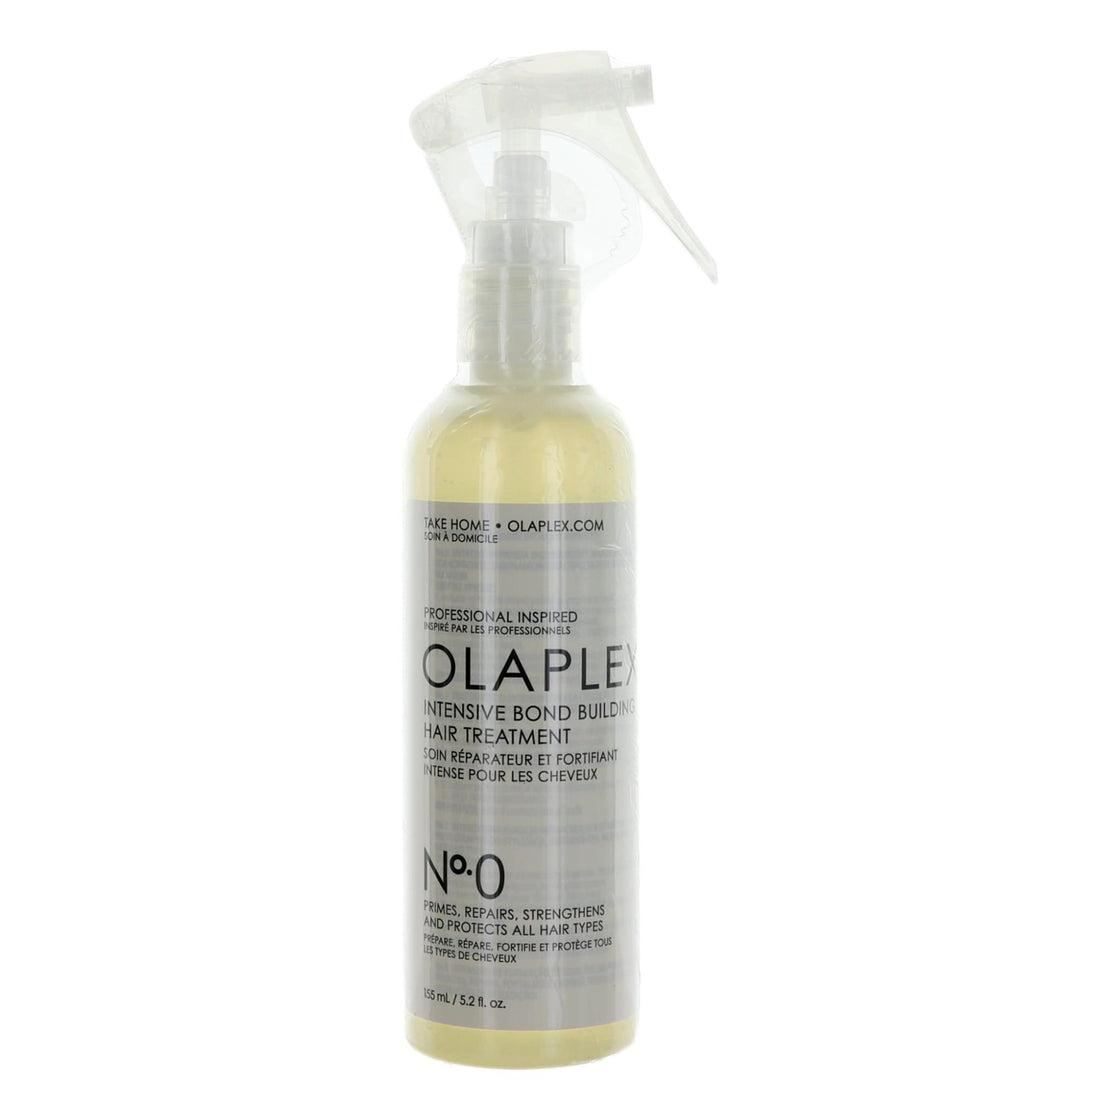 Olaplex No. 0 Intensive Bond Building By Olaplex, 5.2 Oz Hair Treatment